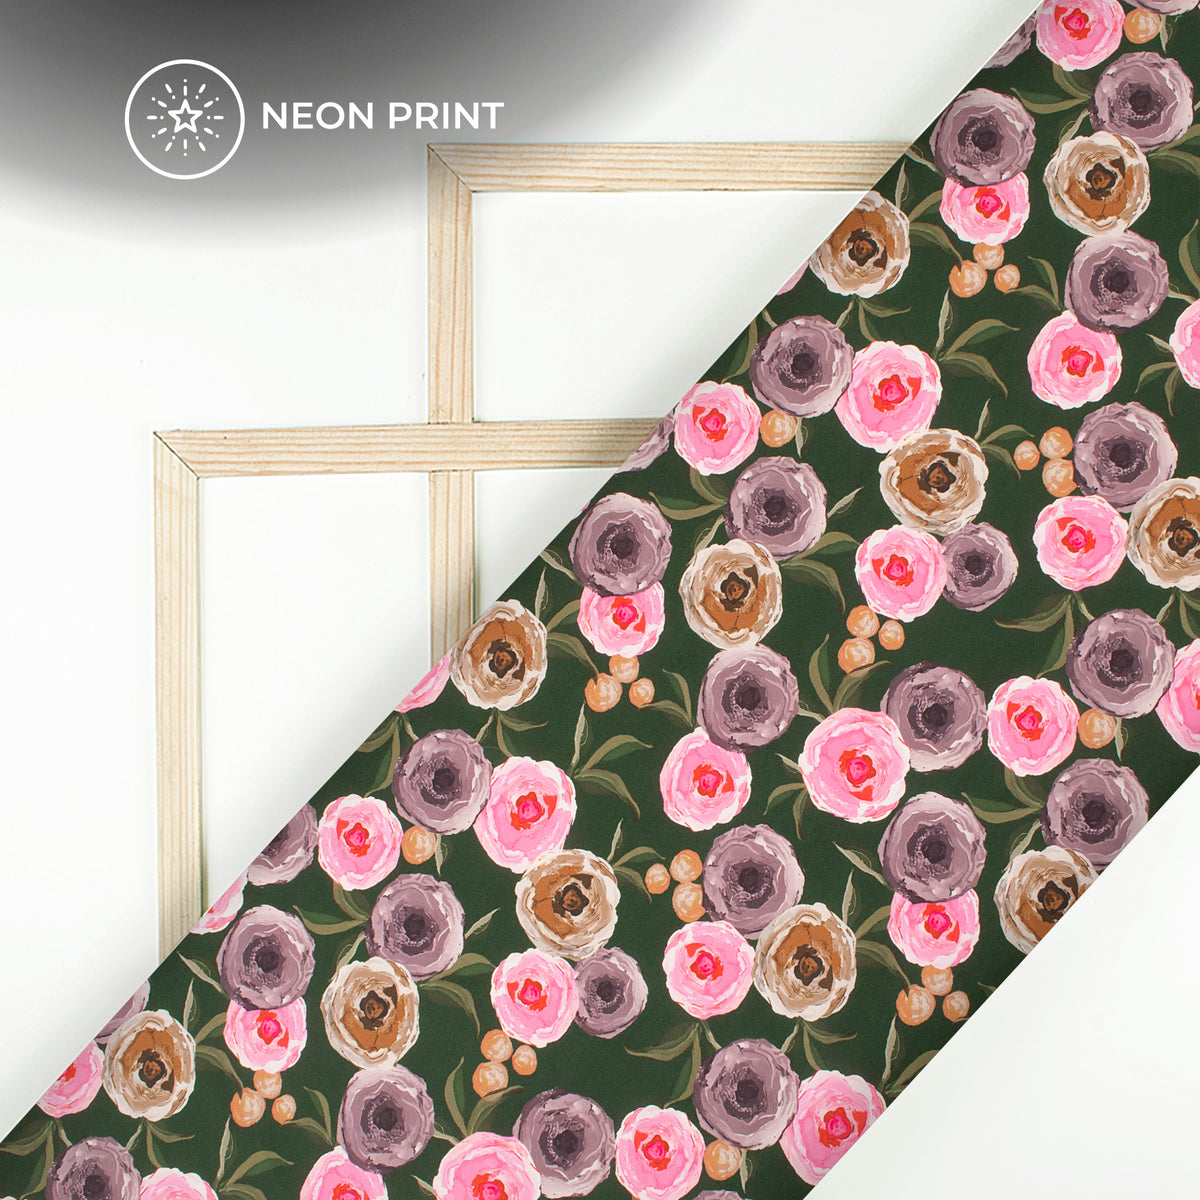 Neon Spectrum: Floral Digital Print Rayon Fabric